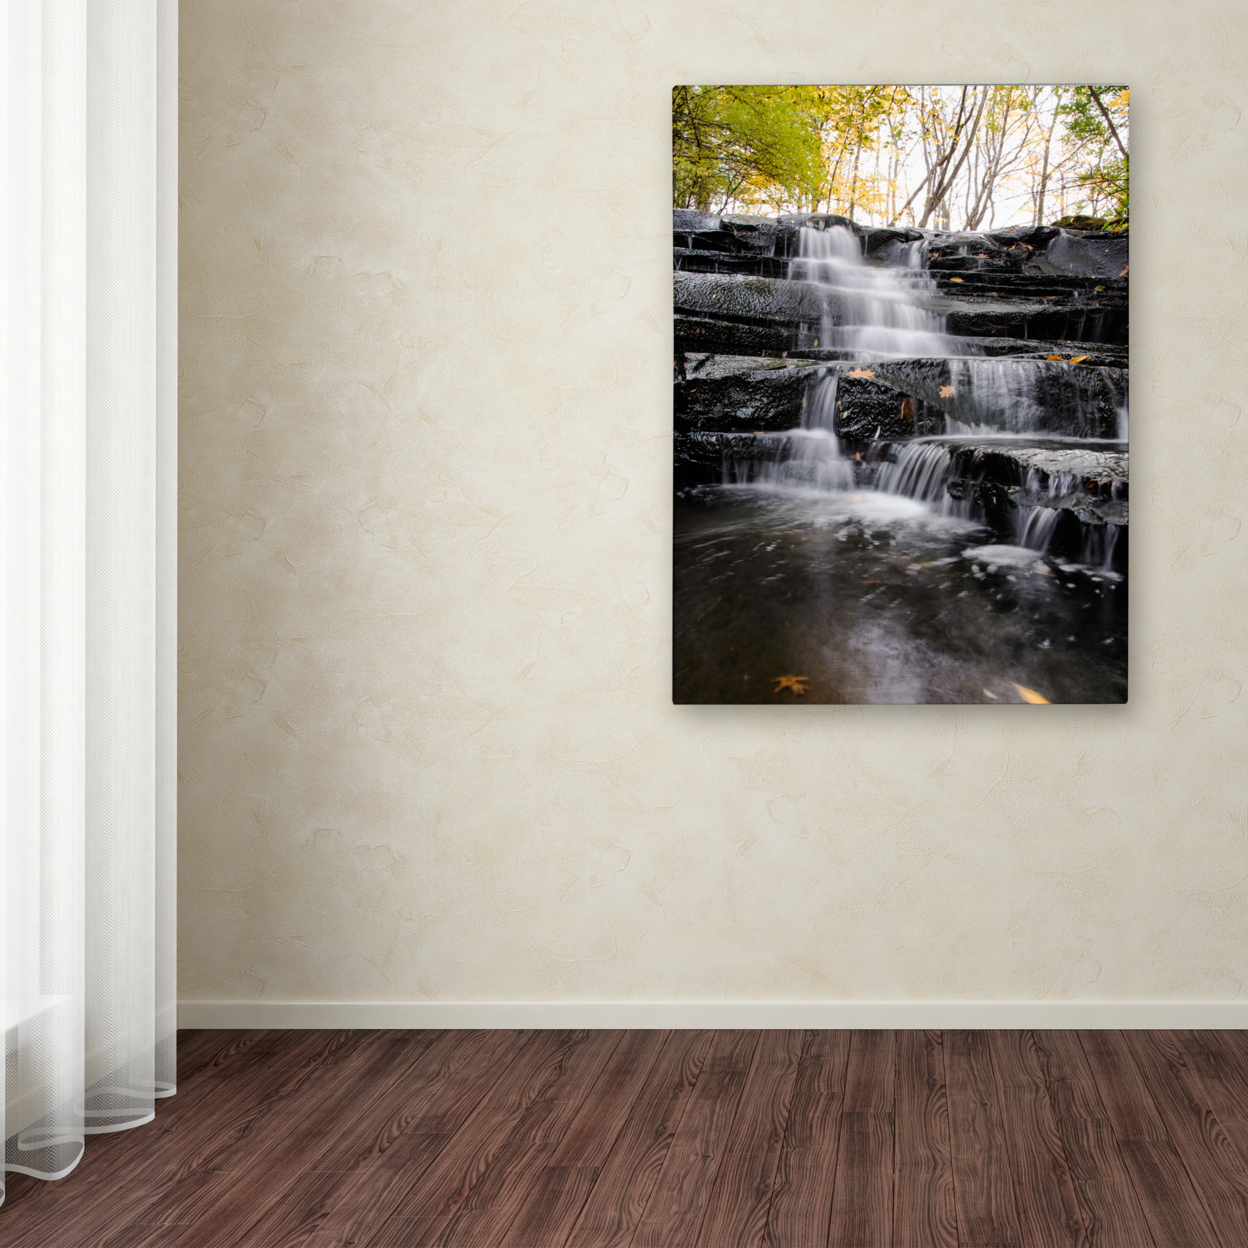 Kurt Shaffer 'Waterfall At Lake View' Canvas Wall Art 35 X 47 Inches